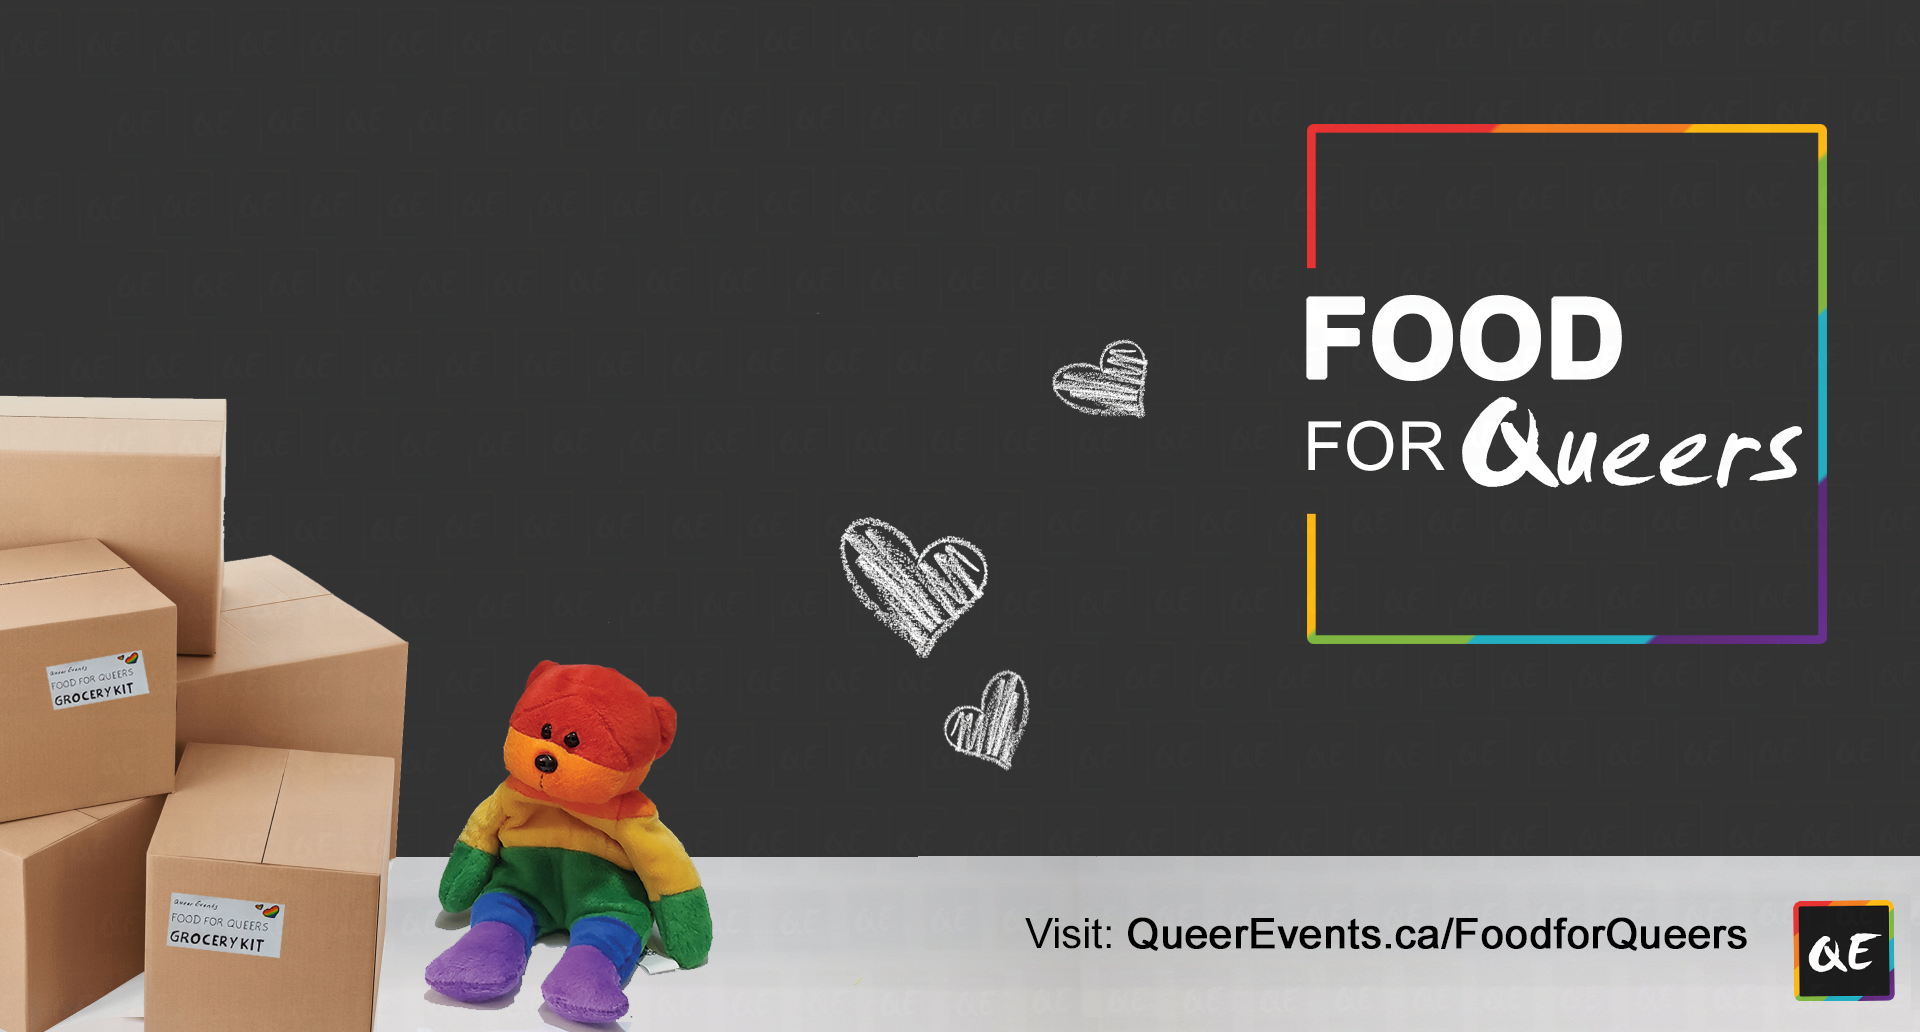 queerevents.ca program - food for queers community program